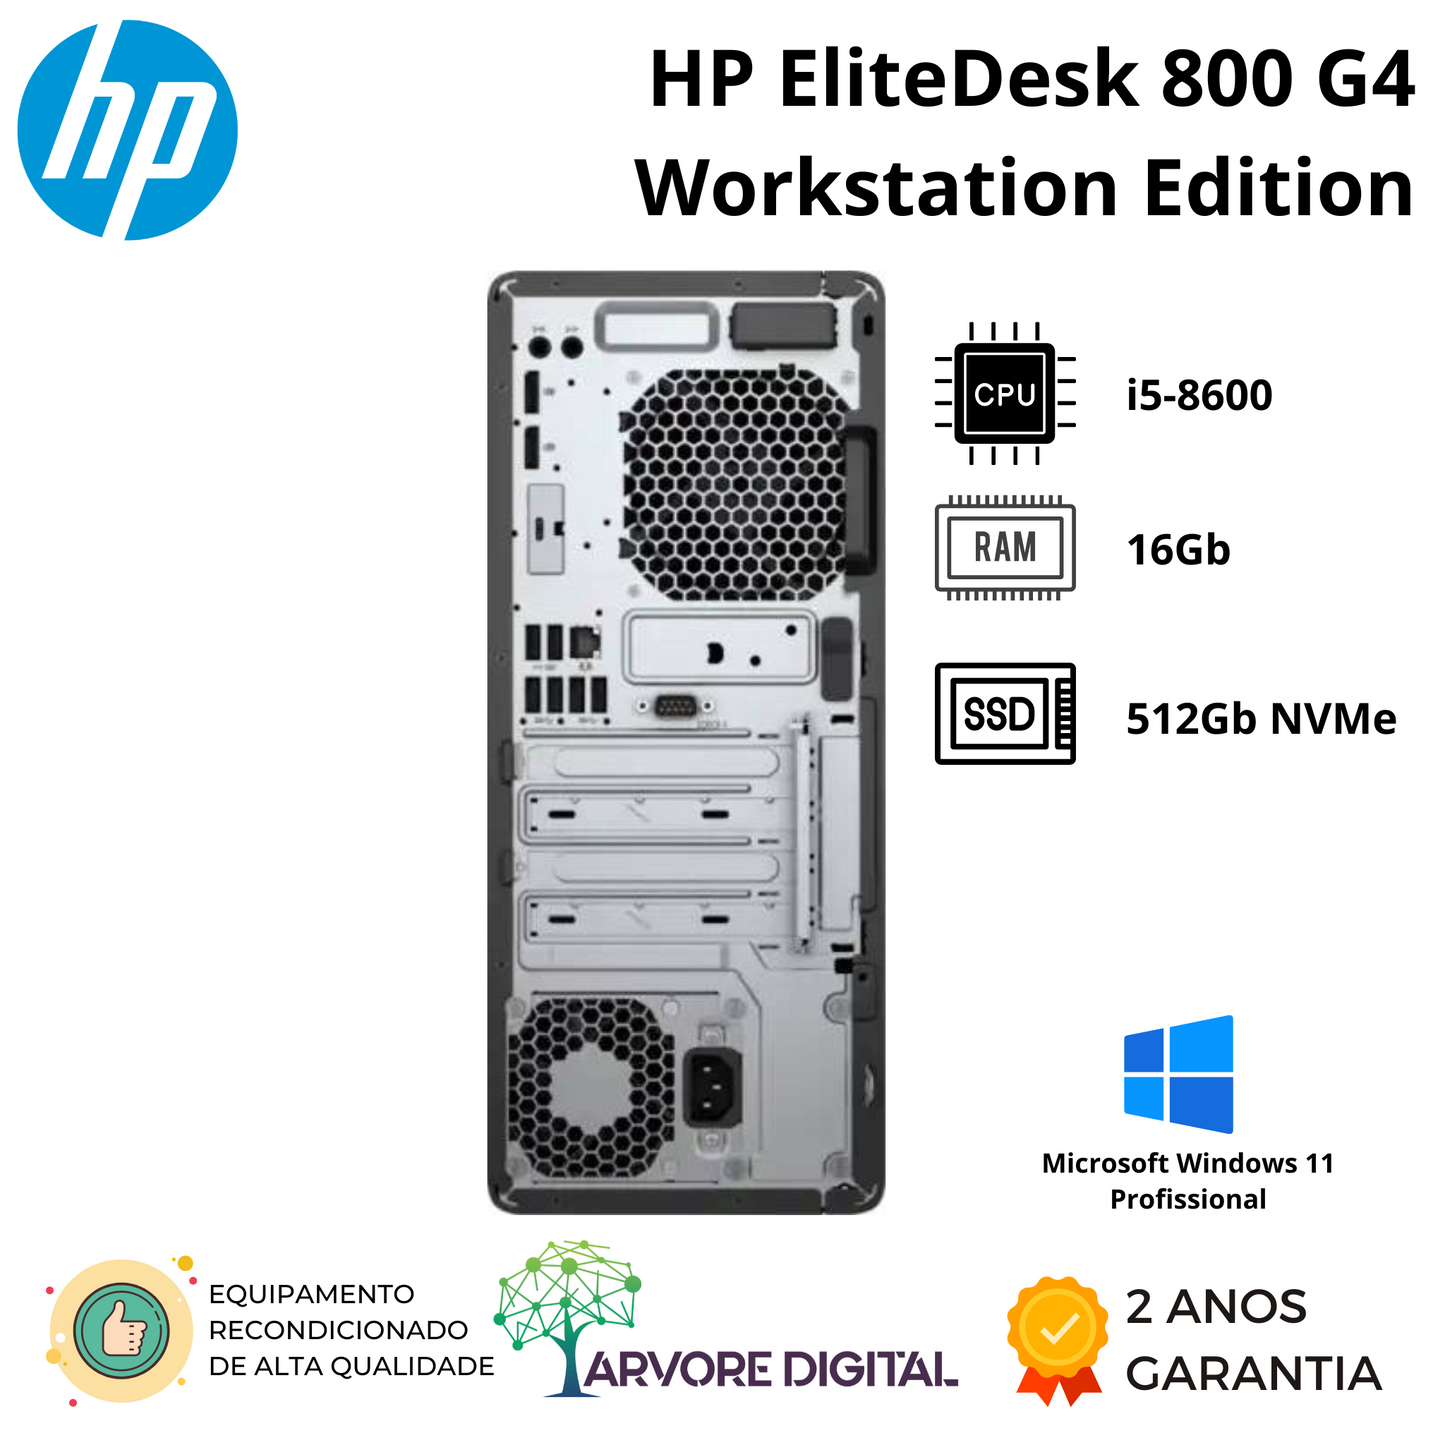 HP EliteDesk 800G4 Workstation Edition